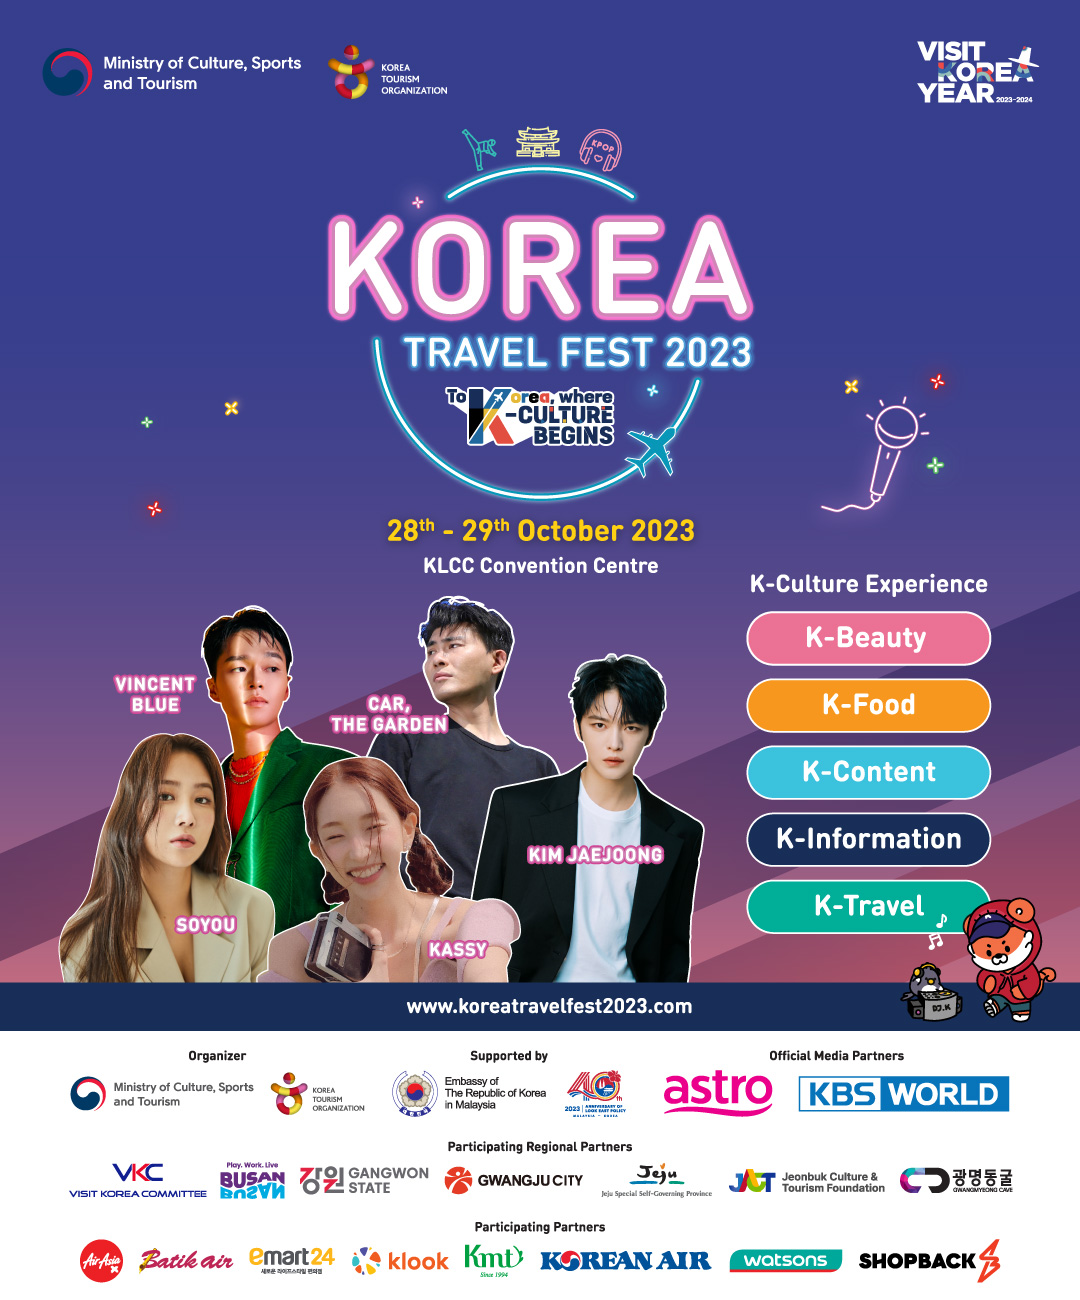 Korea travel fest 2023 to showcase K-Culture in Kuala Lumpur